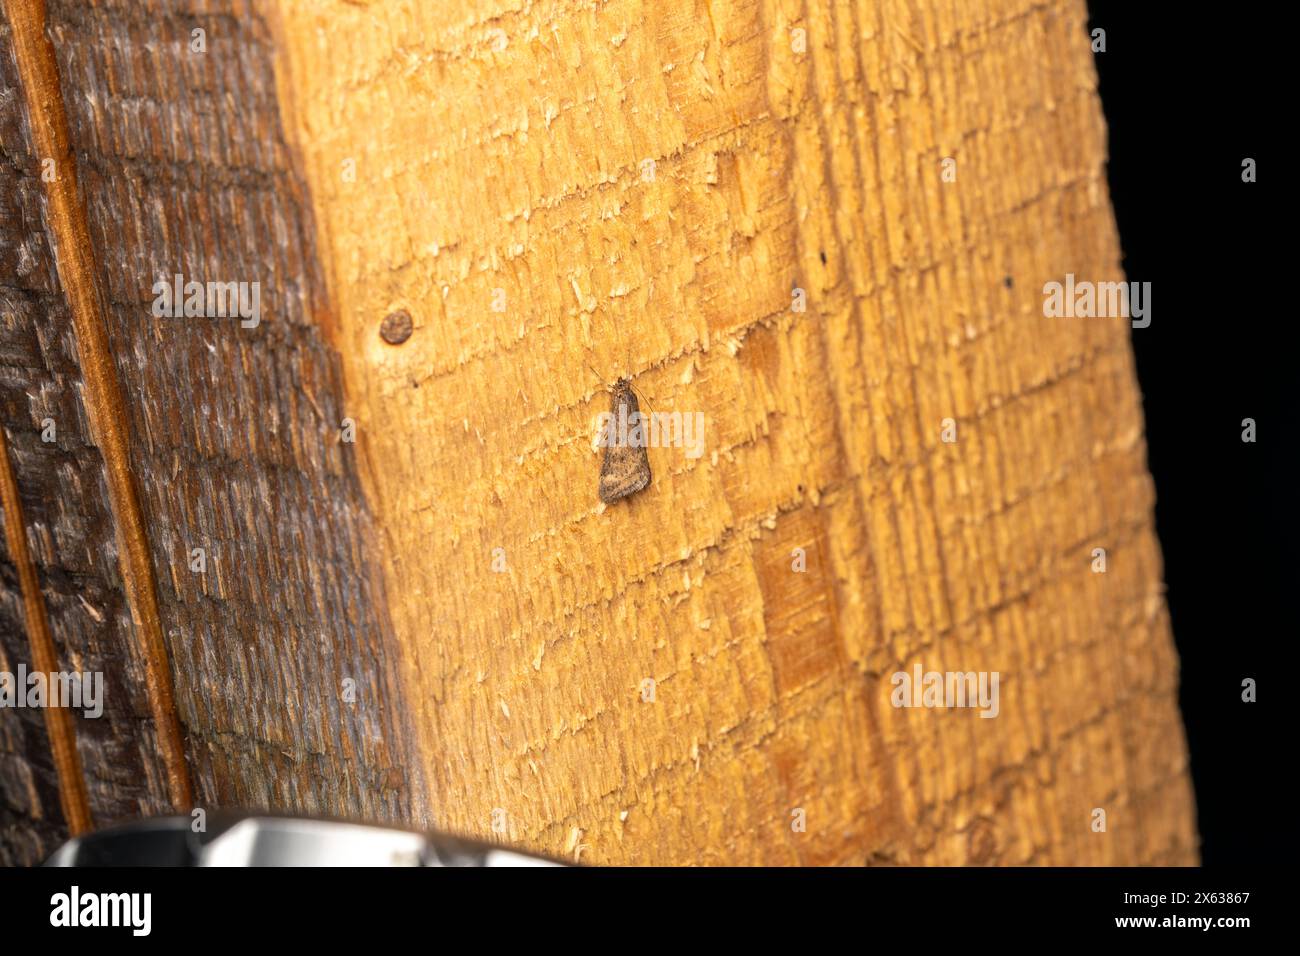 Pyrausta despicata Family Crambidae Genus Pyrausta Straw-barred pearl moth wild nature insect wallpaper, picture, photography Stock Photo